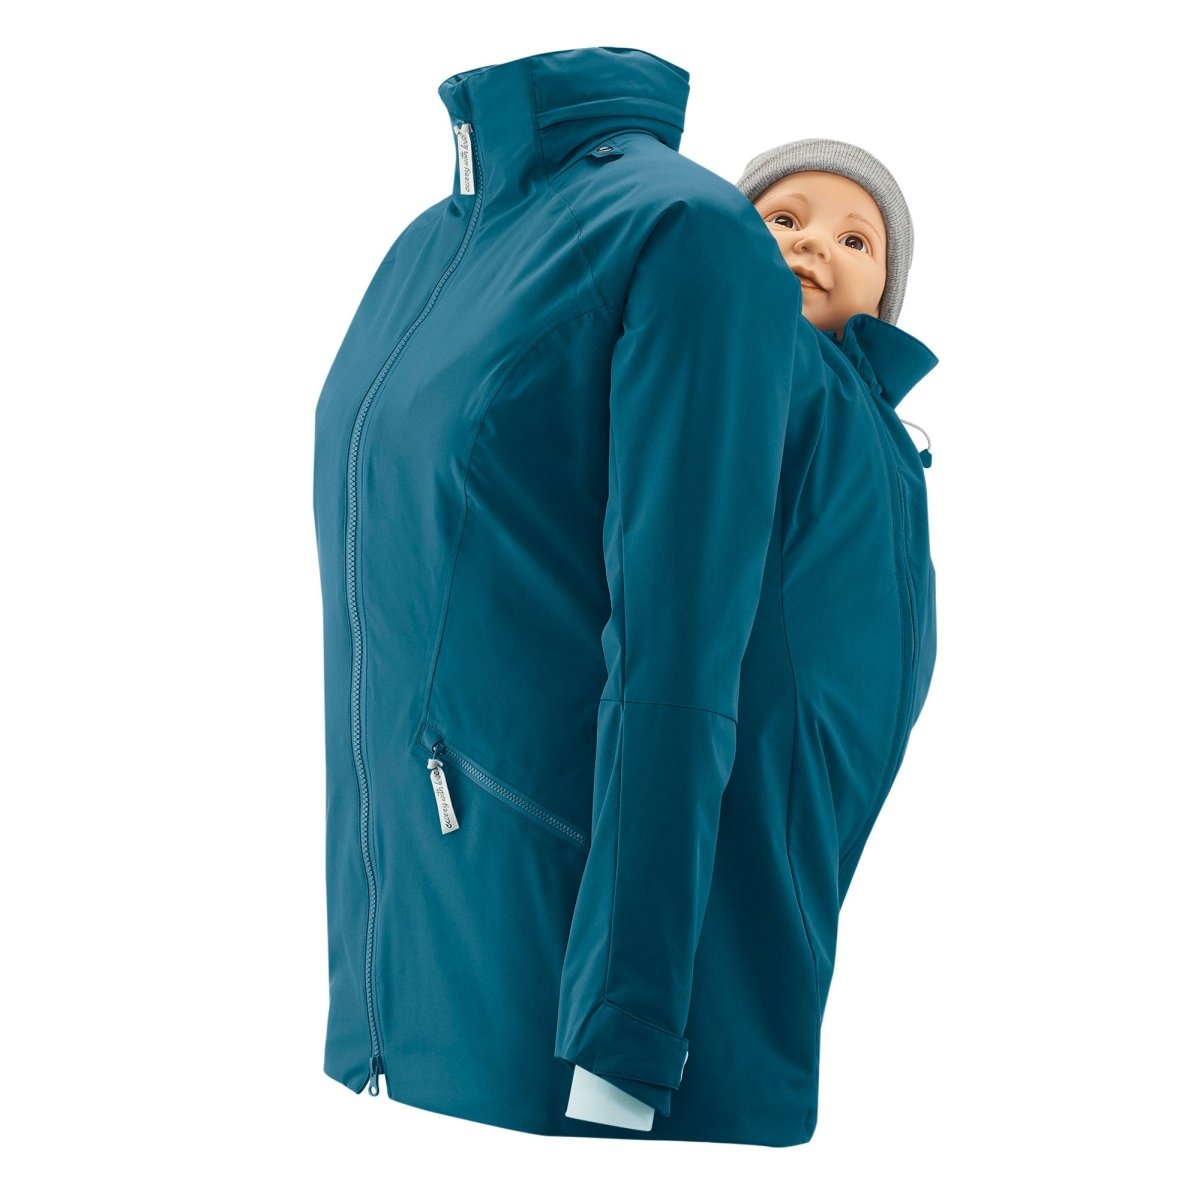 Mamalila Babywearing Jacket Adventure Teal - Babywearing OuterwearLittle Zen One4251054510786